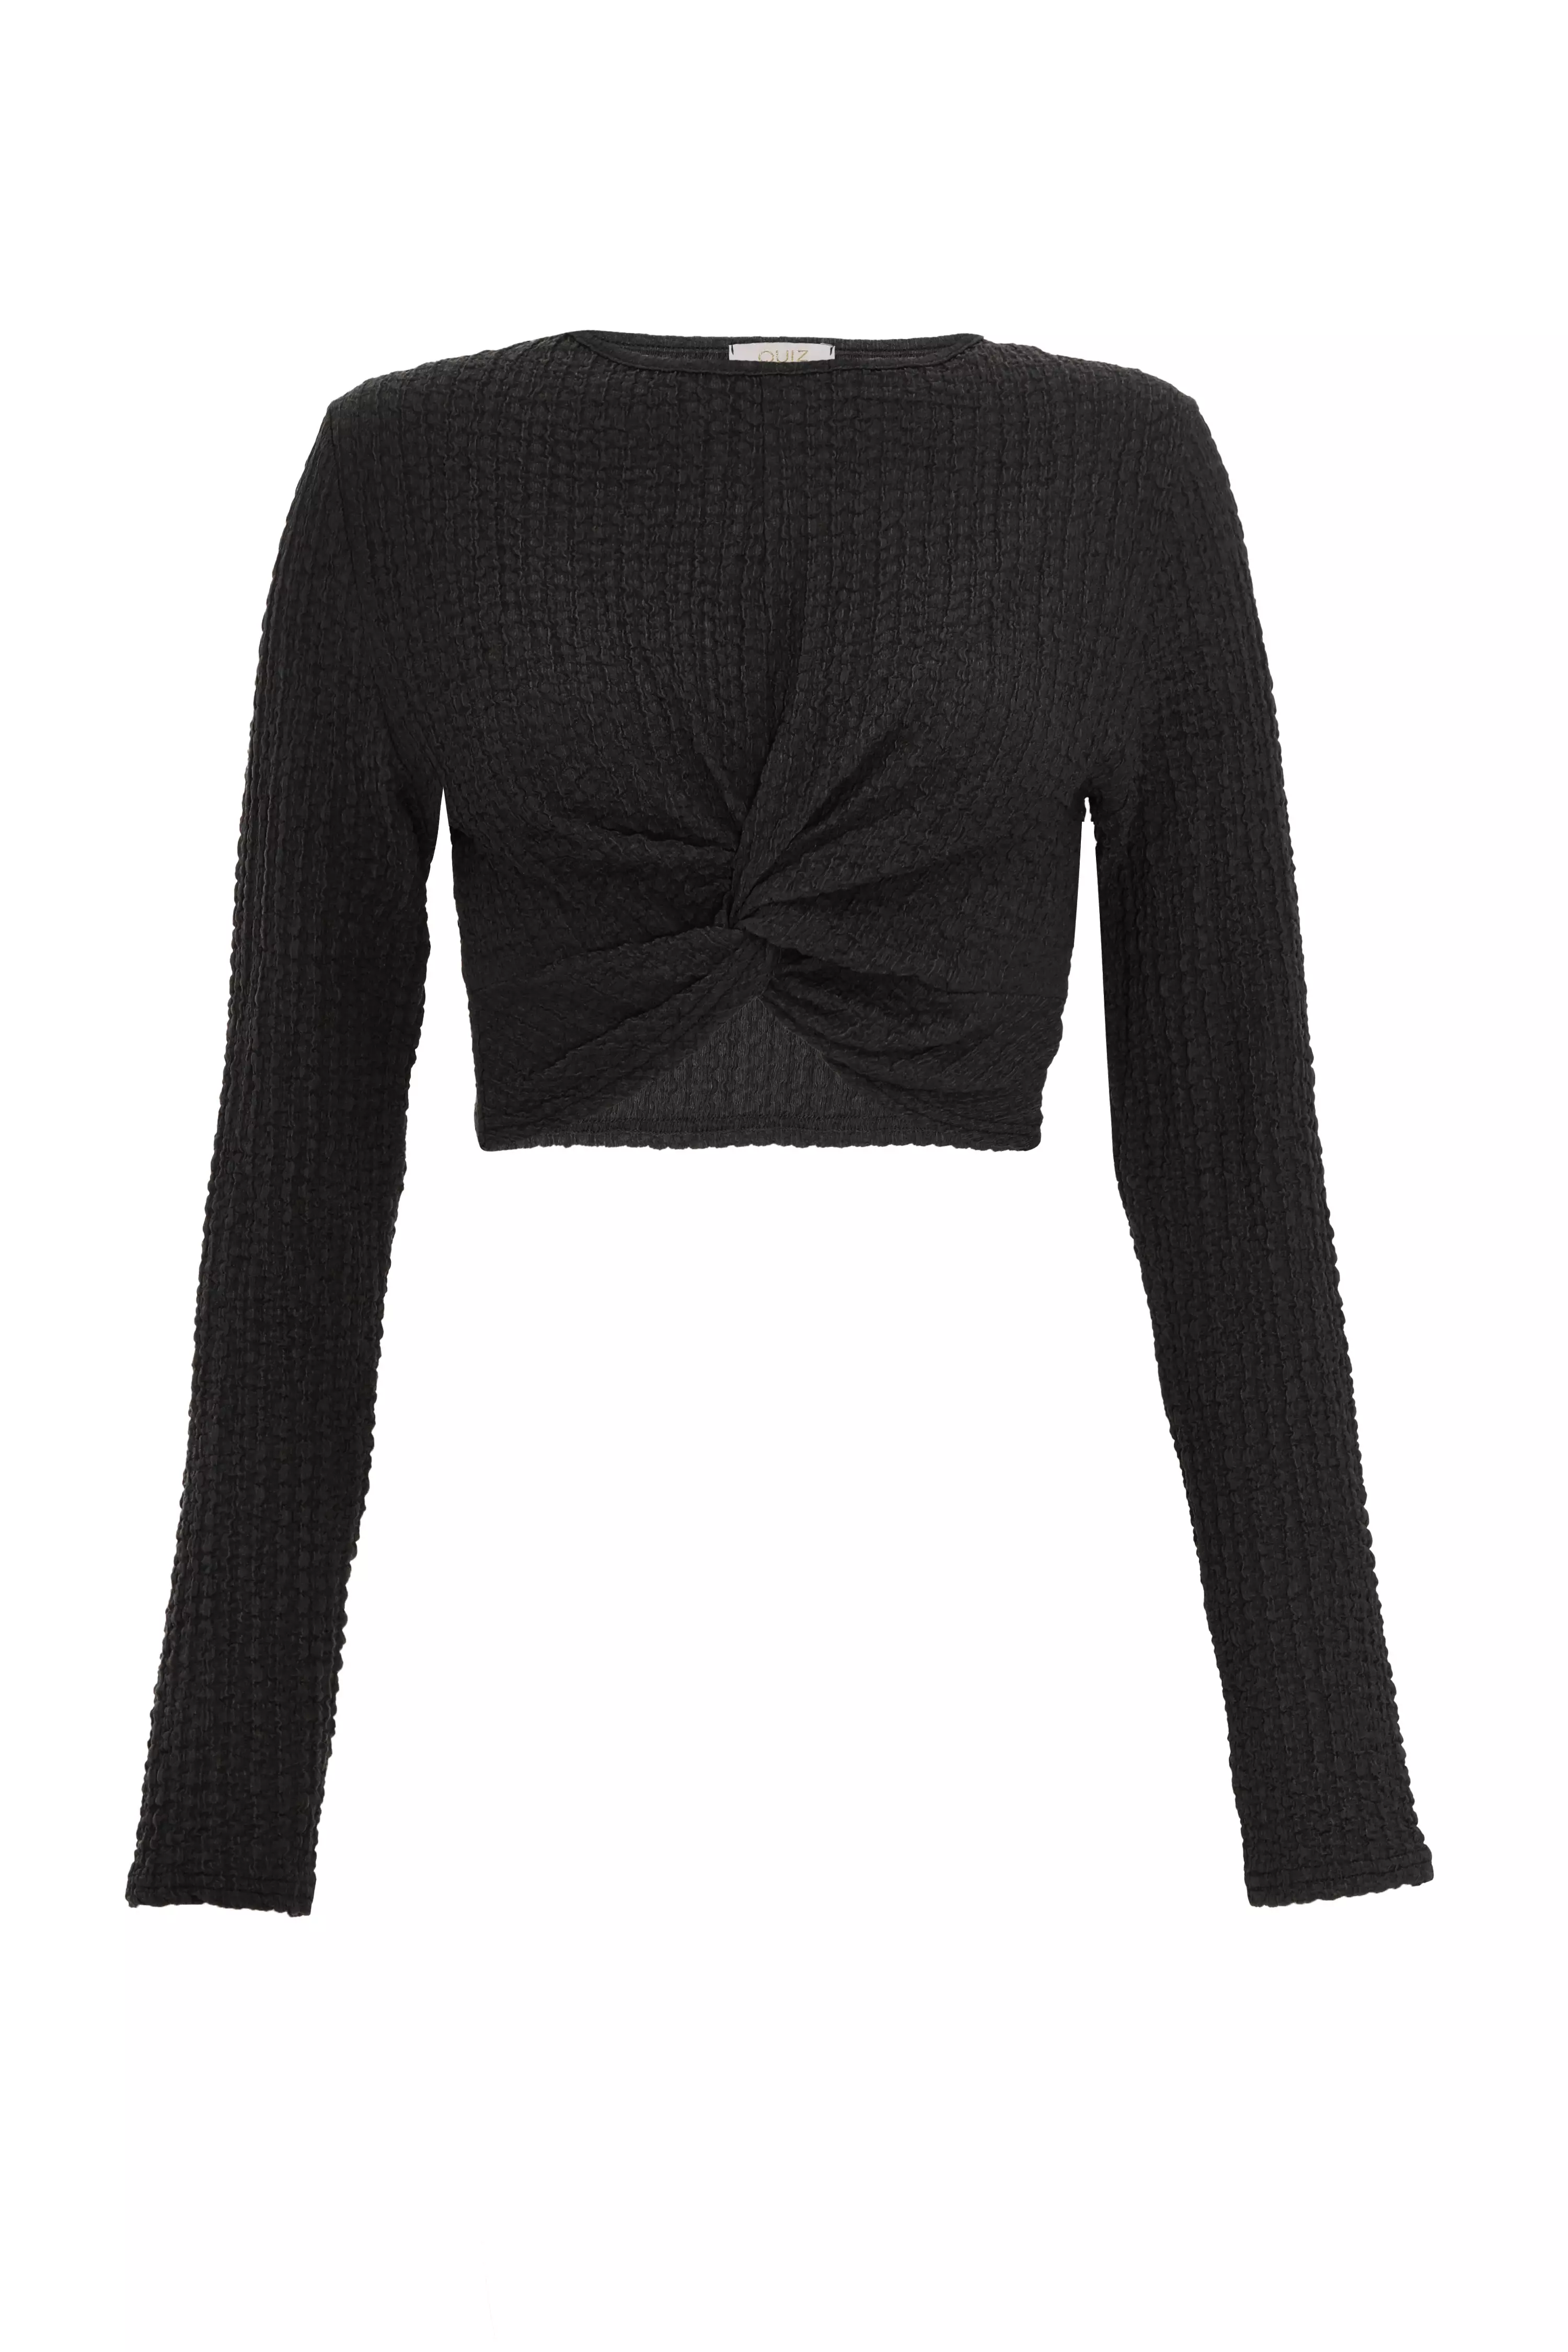 Black Textured Knot Front Crop Top - QUIZ Clothing